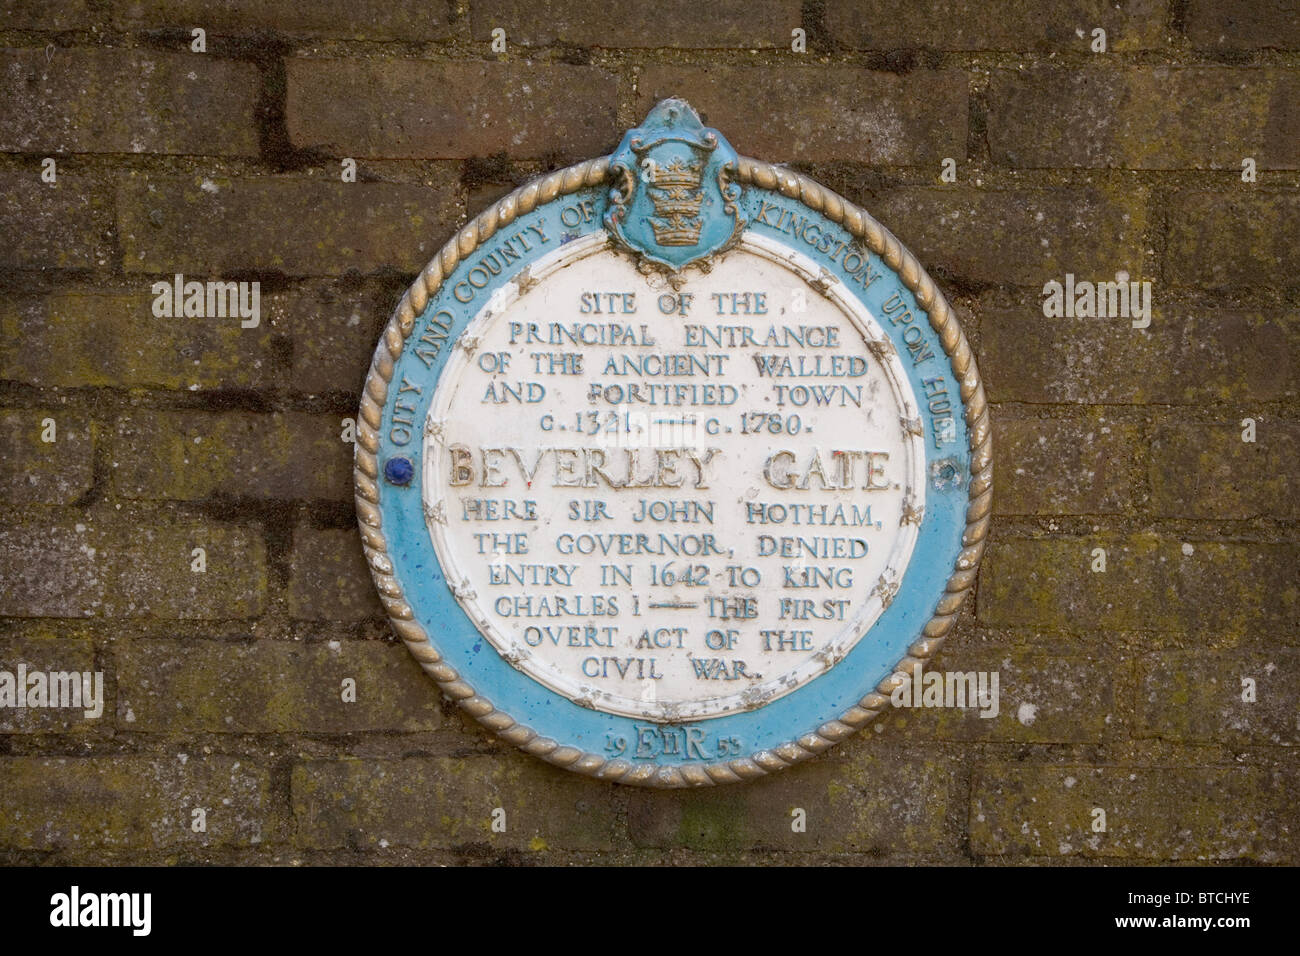 Beverley Gate Plaque, Kingston upon Hull Stockfoto